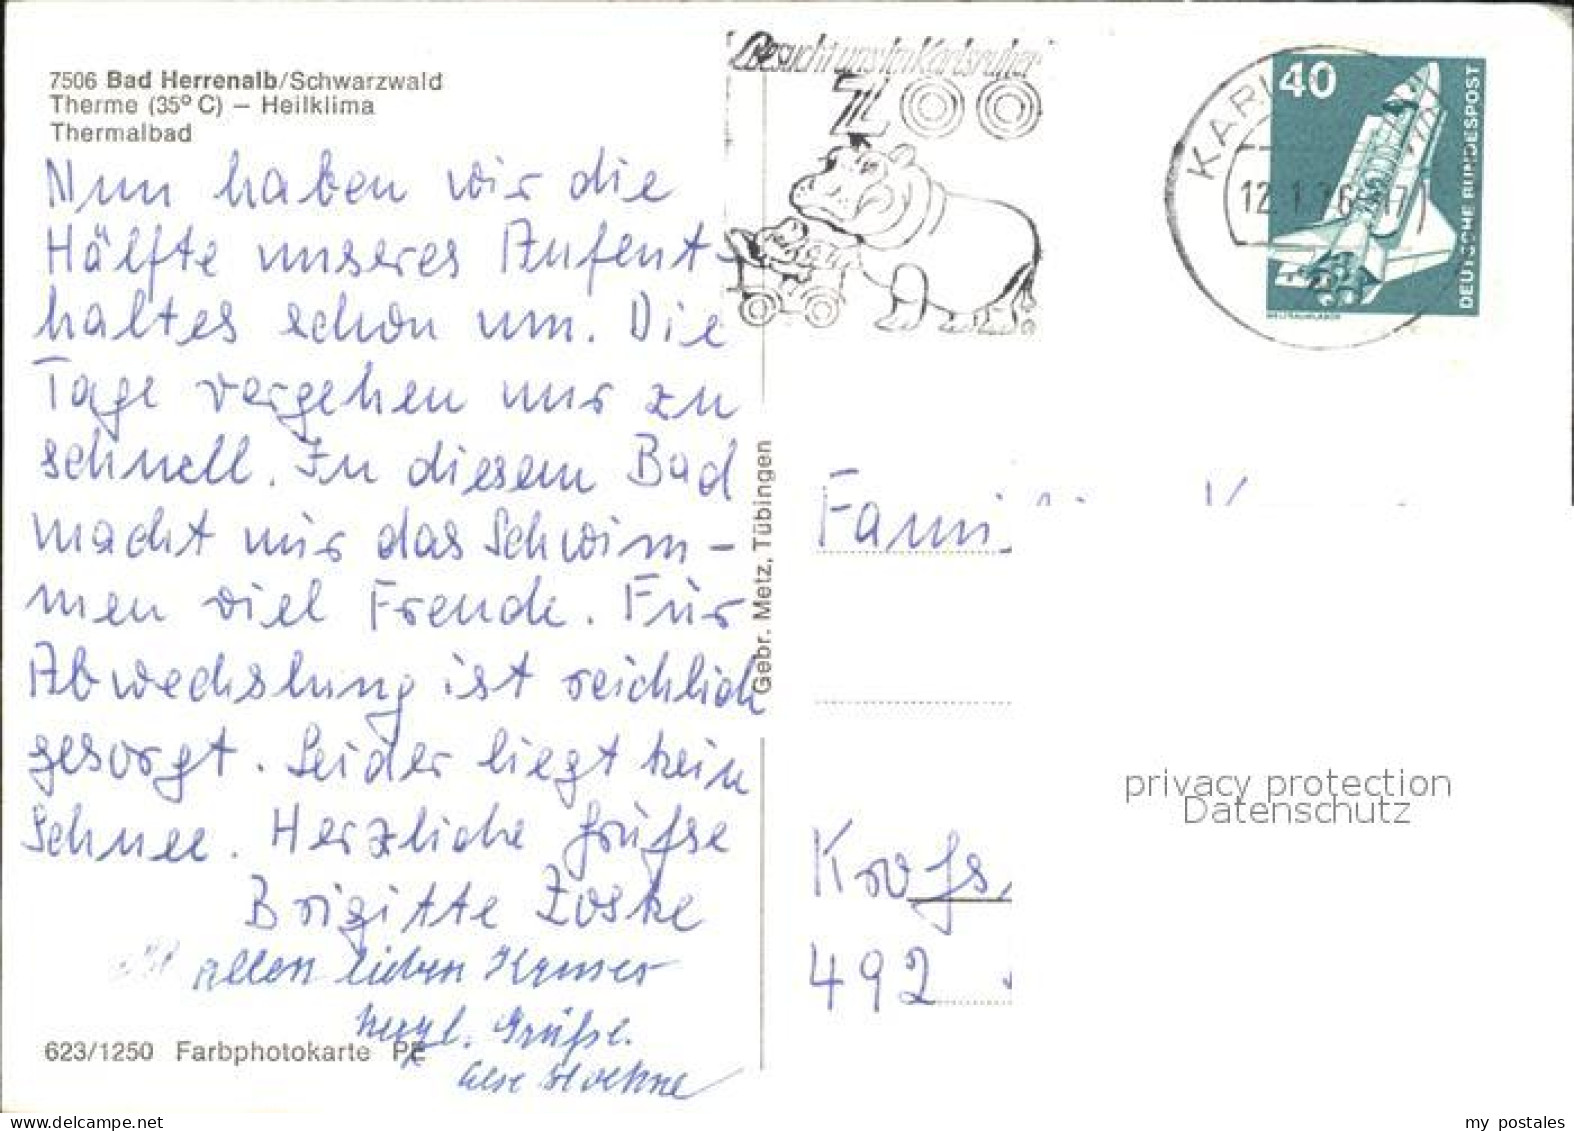 72519584 Bad Herrenalb Thermalbad Bad Herrenalb - Bad Herrenalb